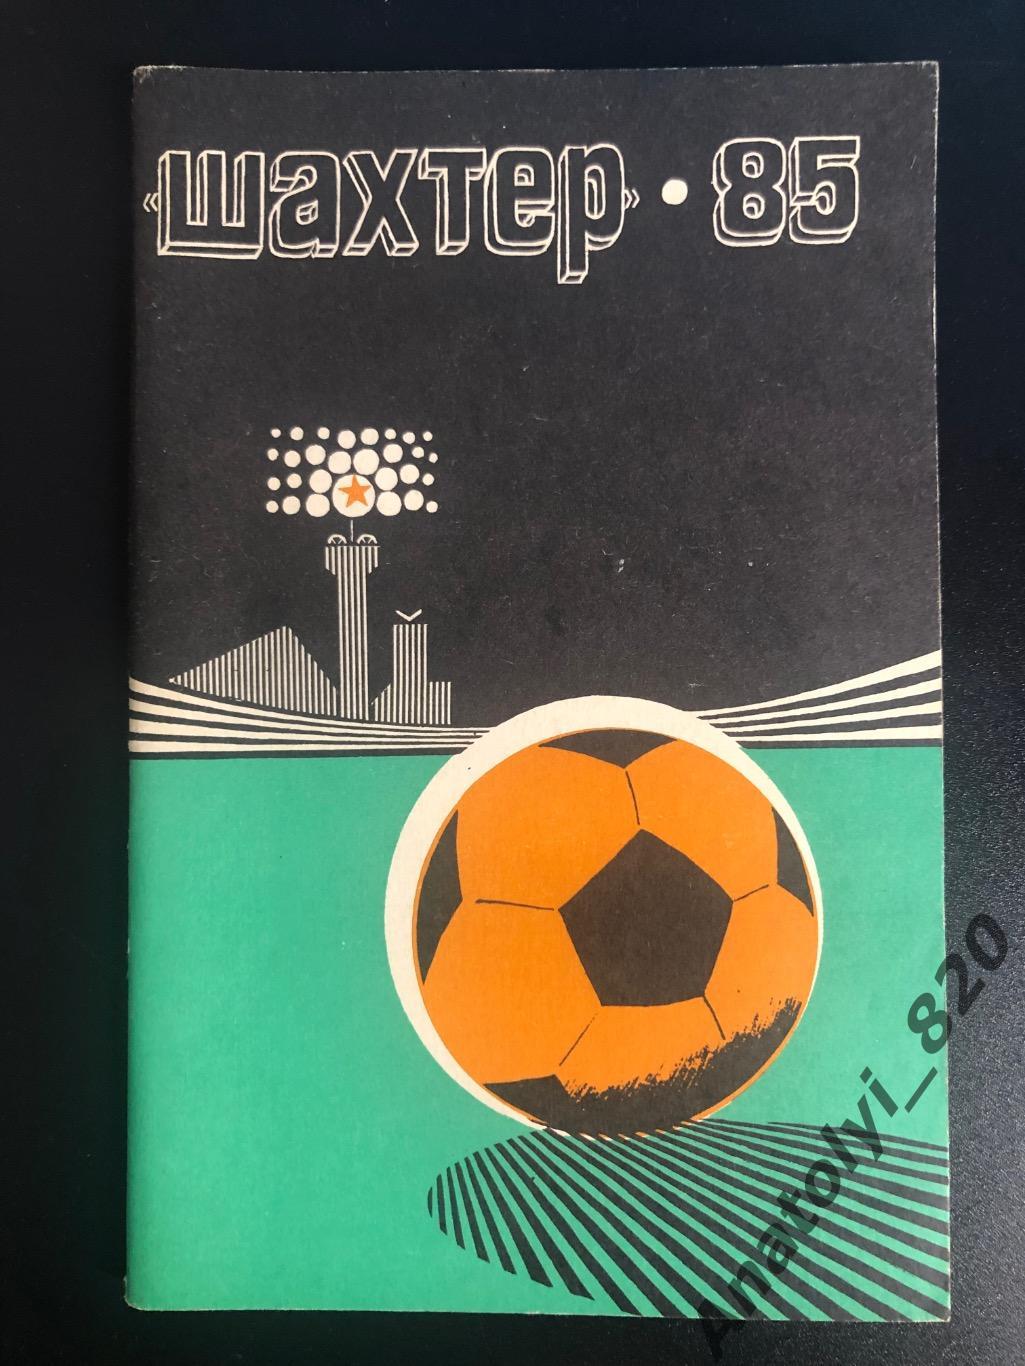 Шахтер Донецк 1985 год календарь - справочник